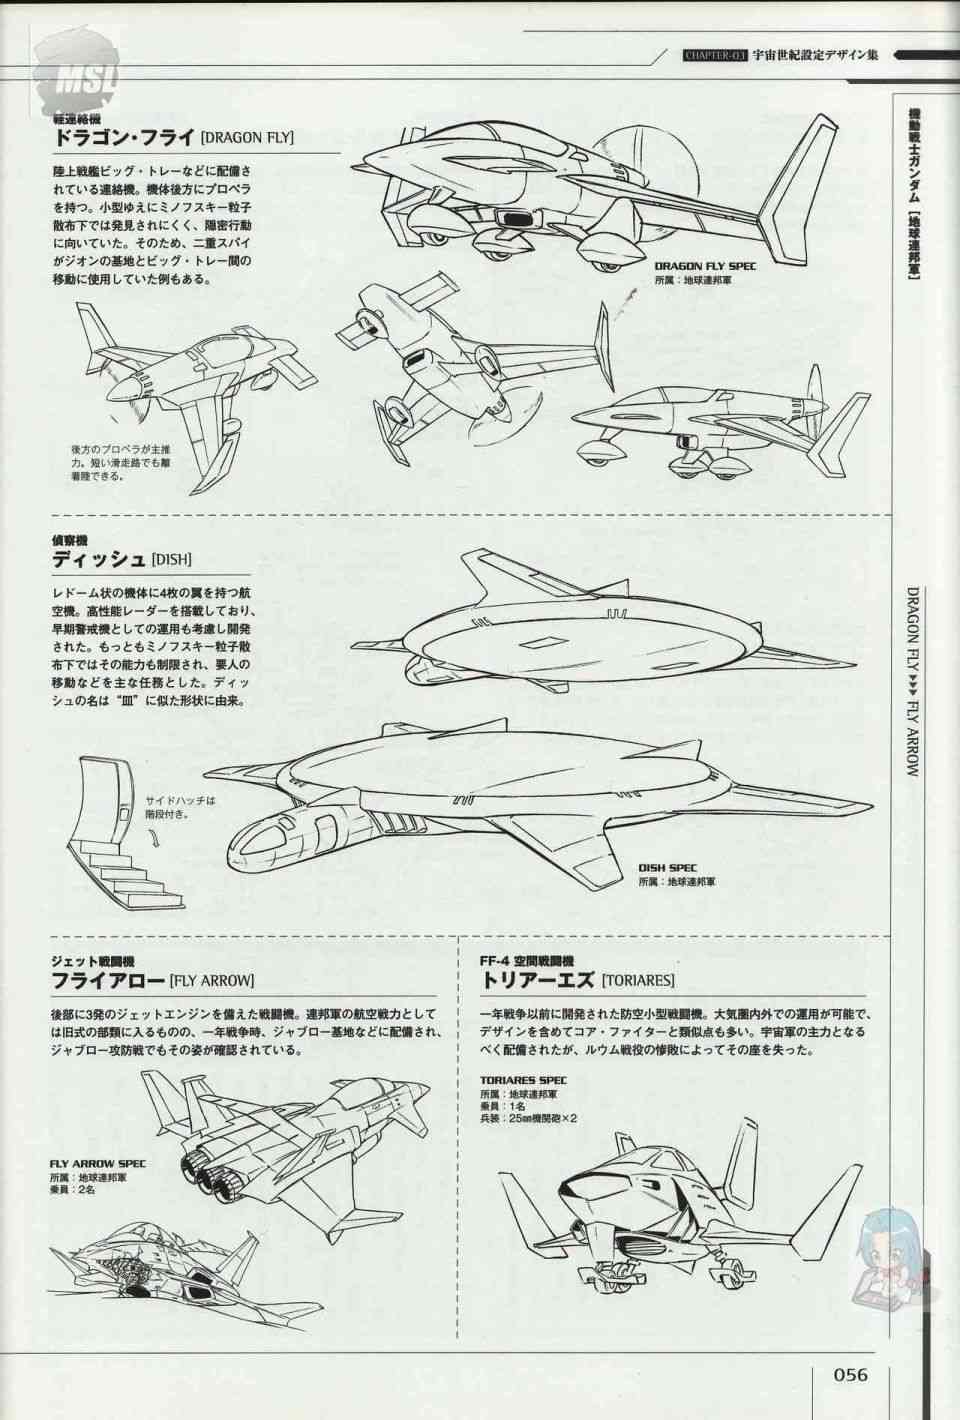 Mobile Suit Gundam - Ship amp; Aerospace Plane Encyclopedia - 1話(2/4) - 6